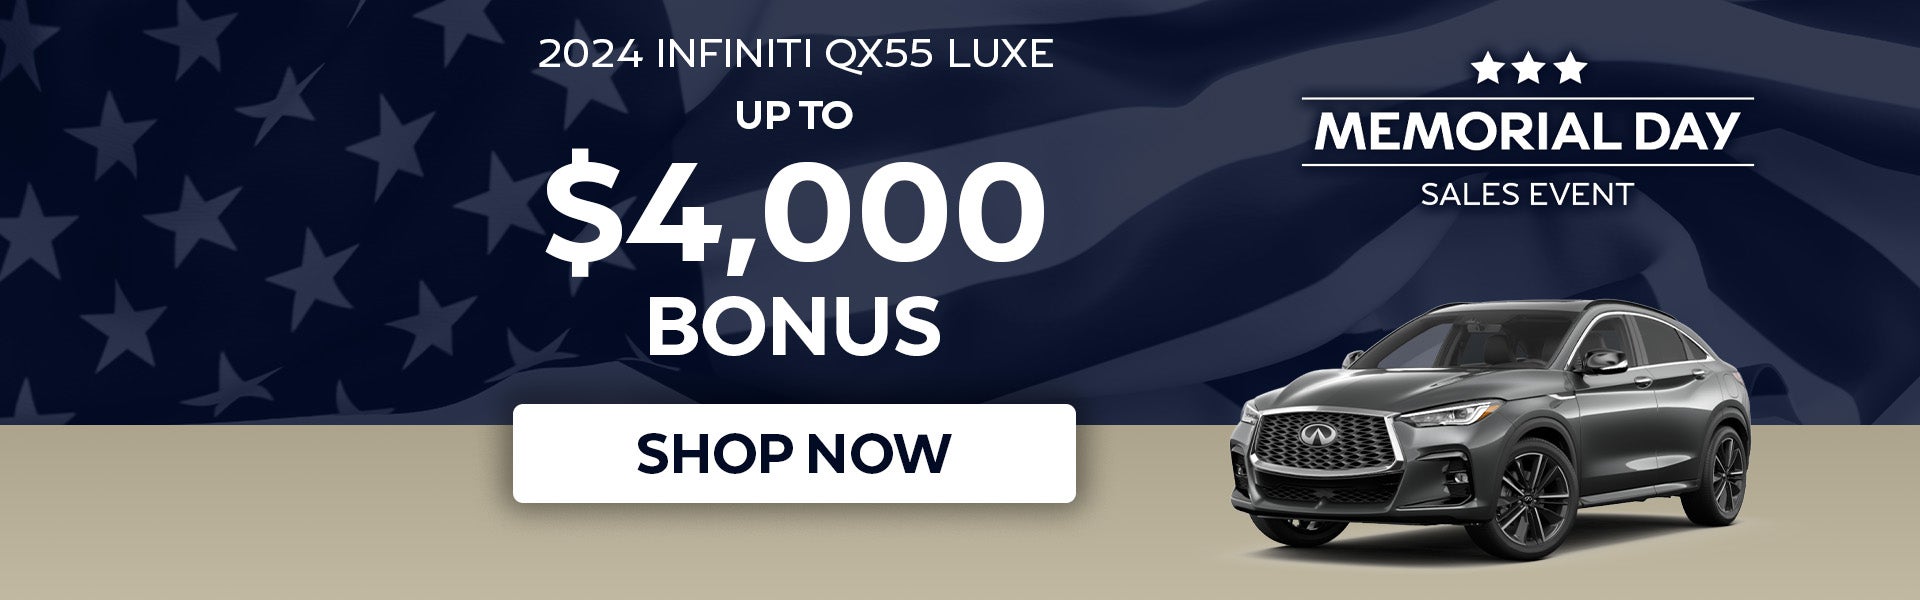 2024 Infiniti QX55 Luxe